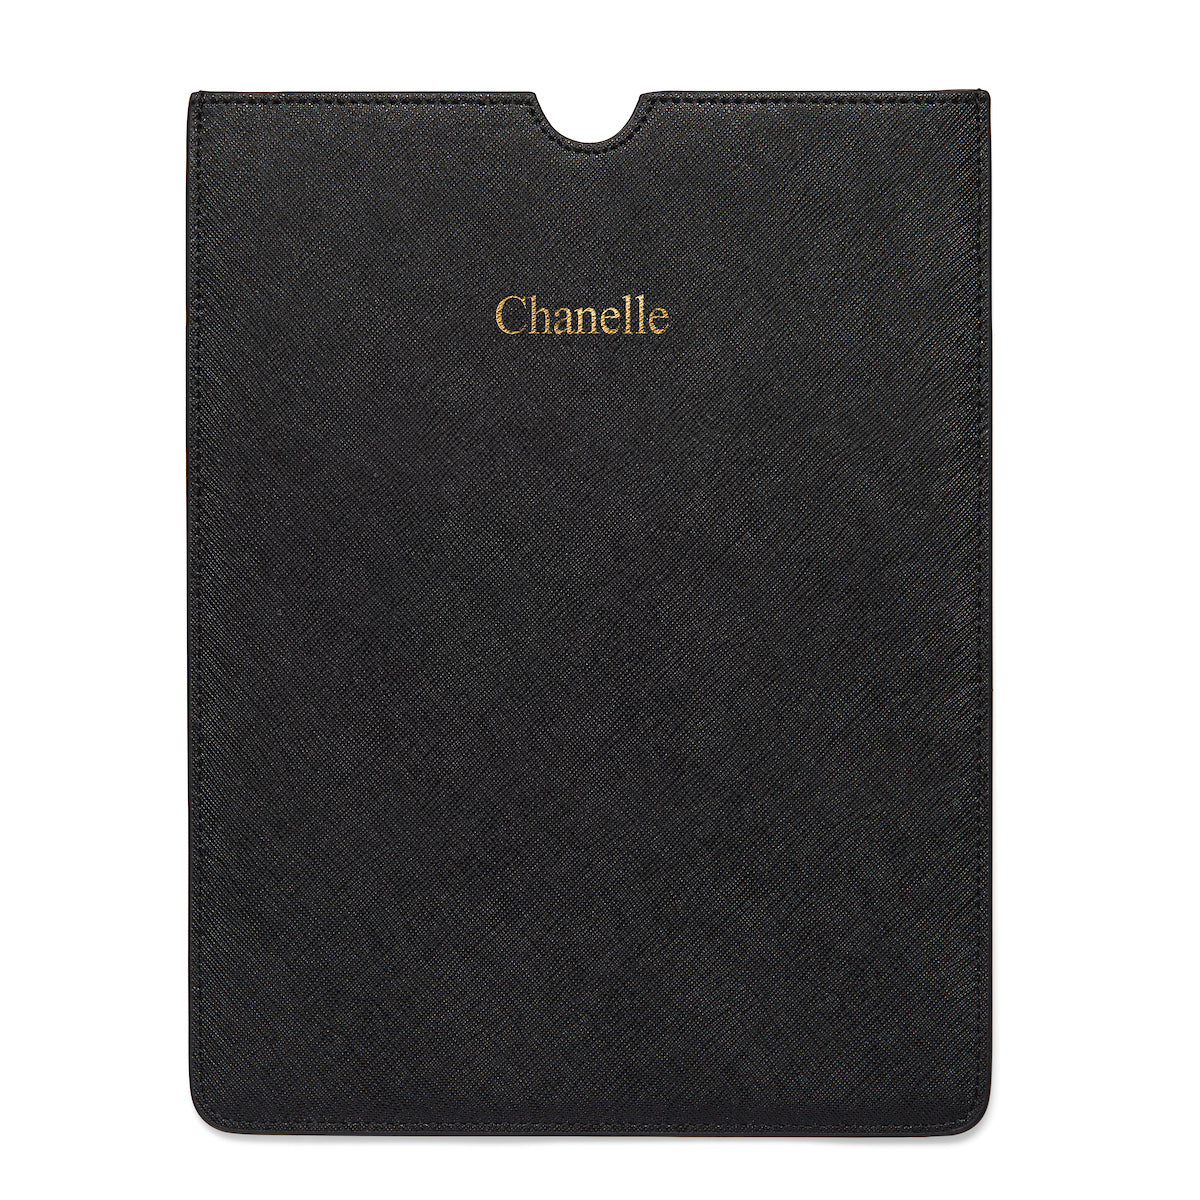 iPad Sleeve in Saffiano Leather - Black